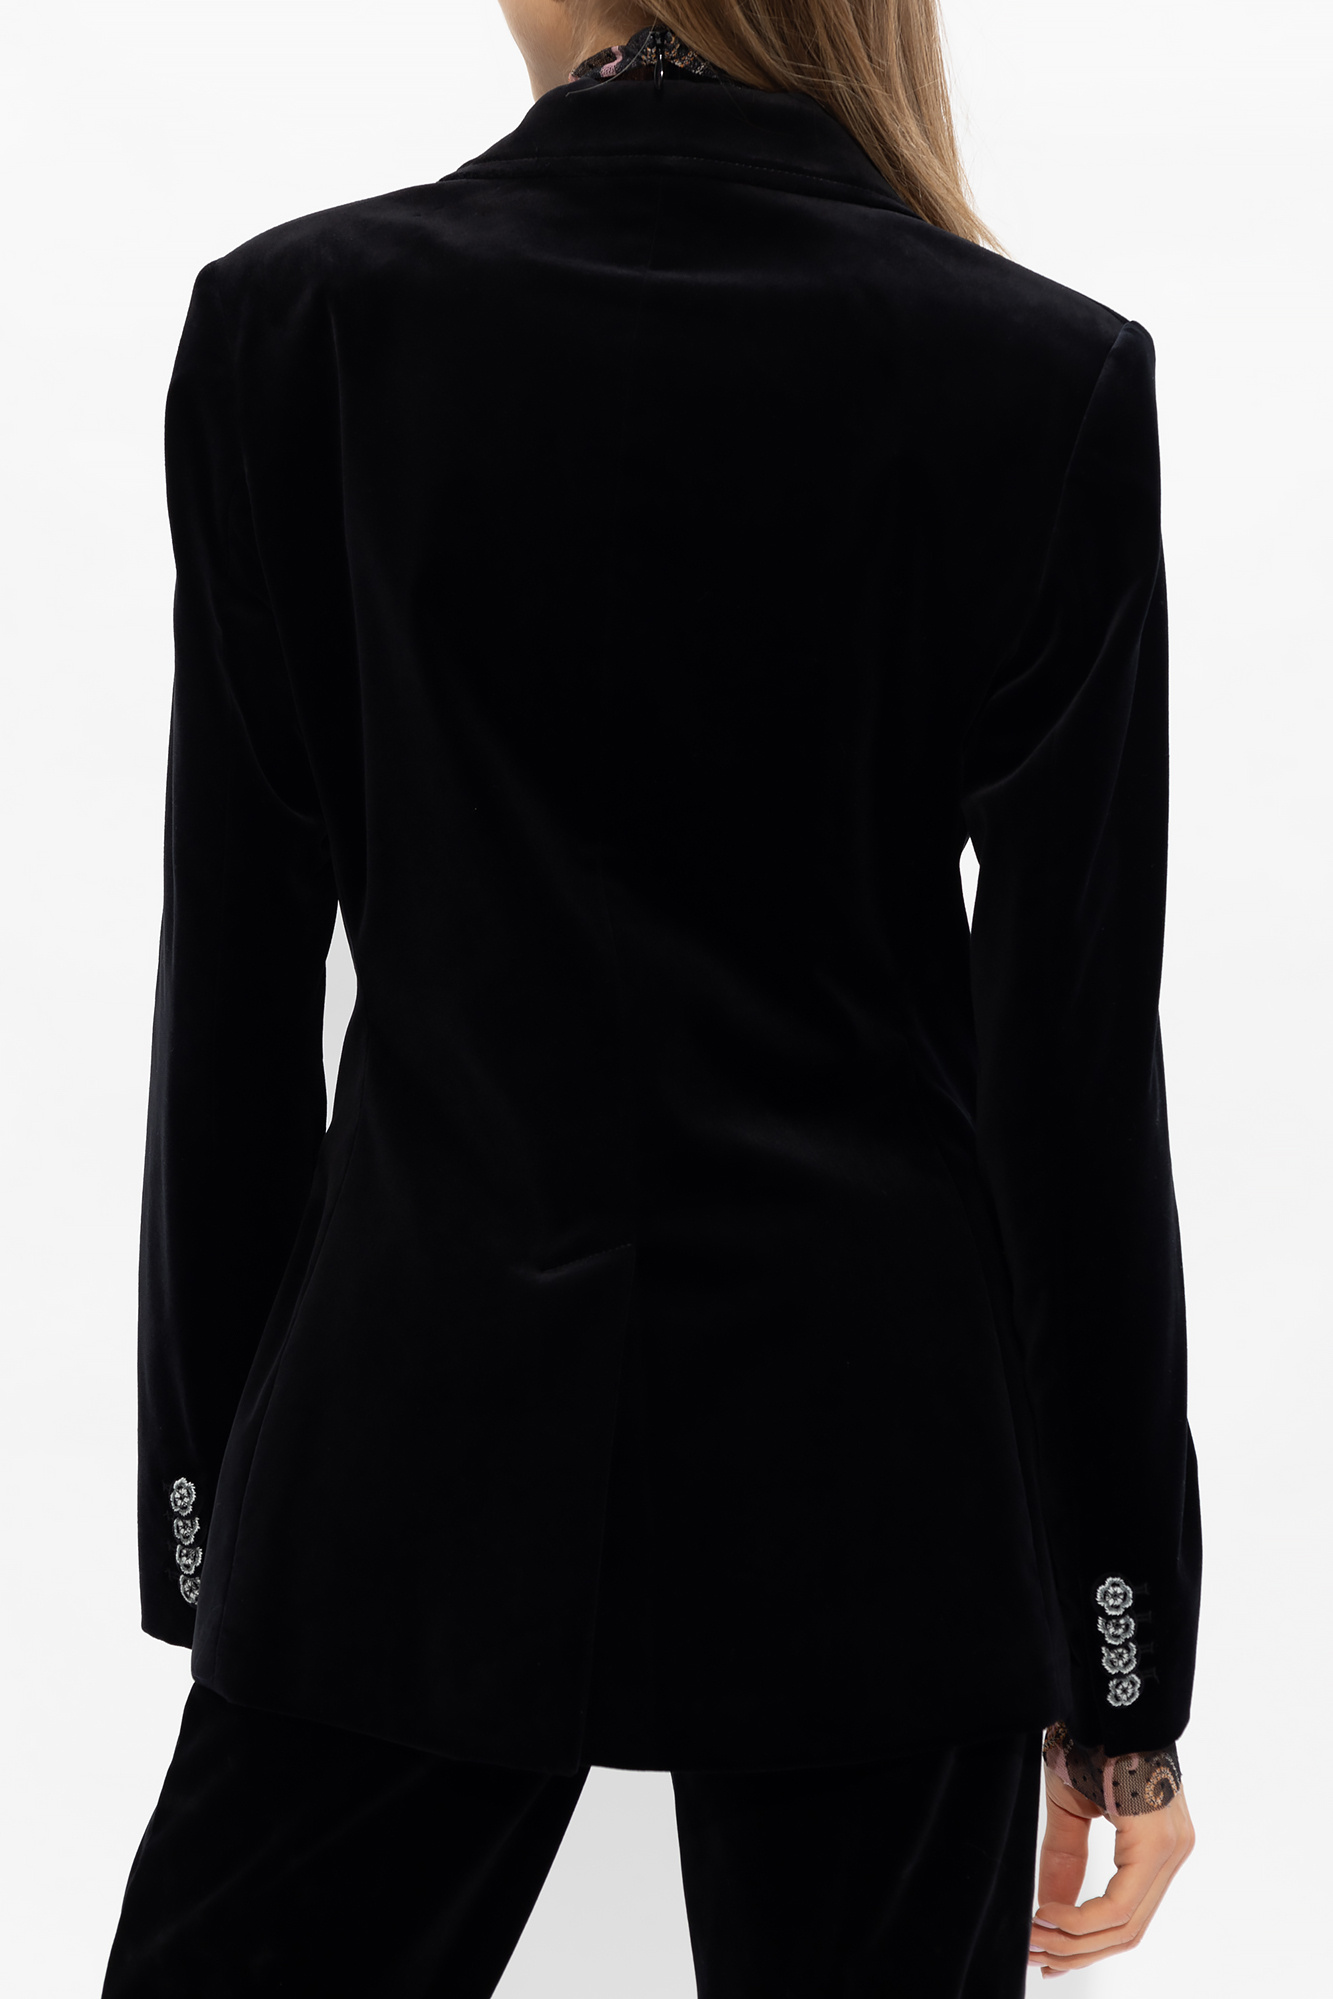 Etro Umbro England Away Classic Licensed Long Sleeve Shirt 2022 2023 Womens